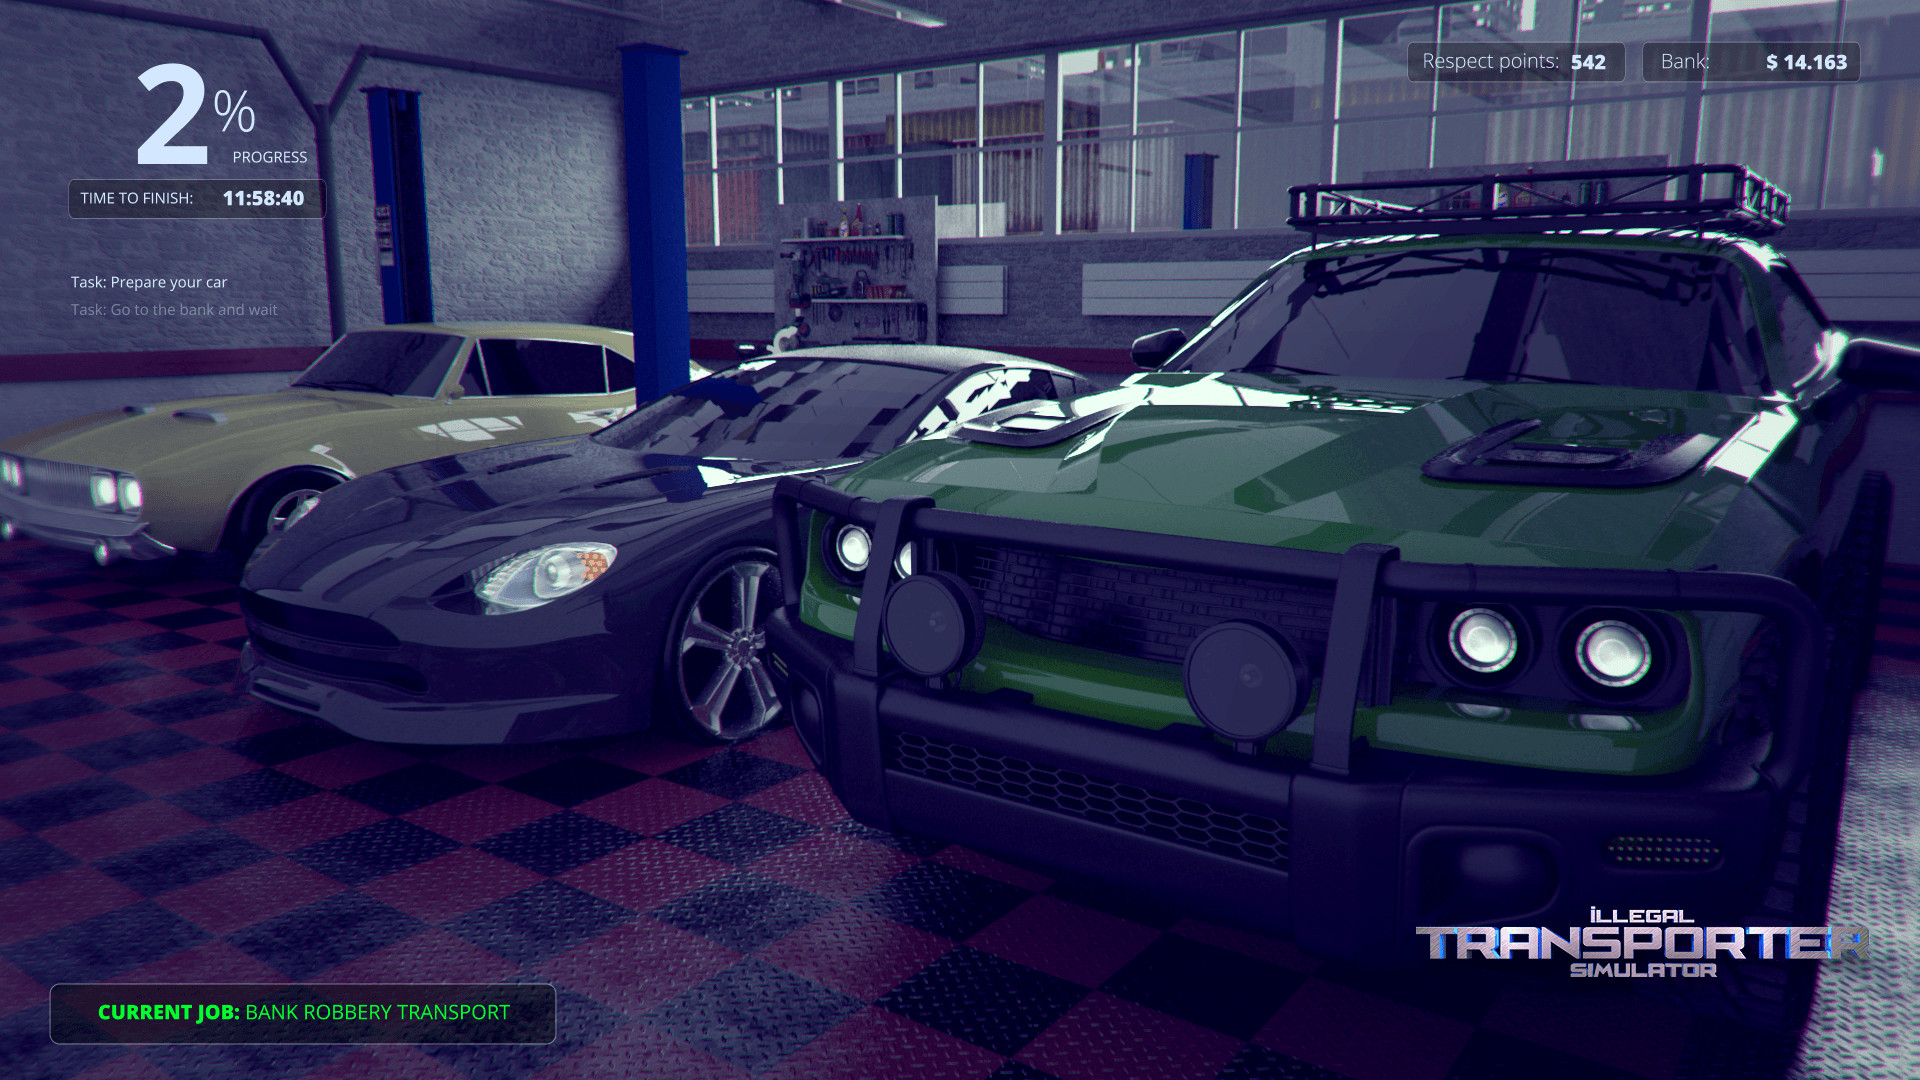 illegal Transporter Simulator screenshot